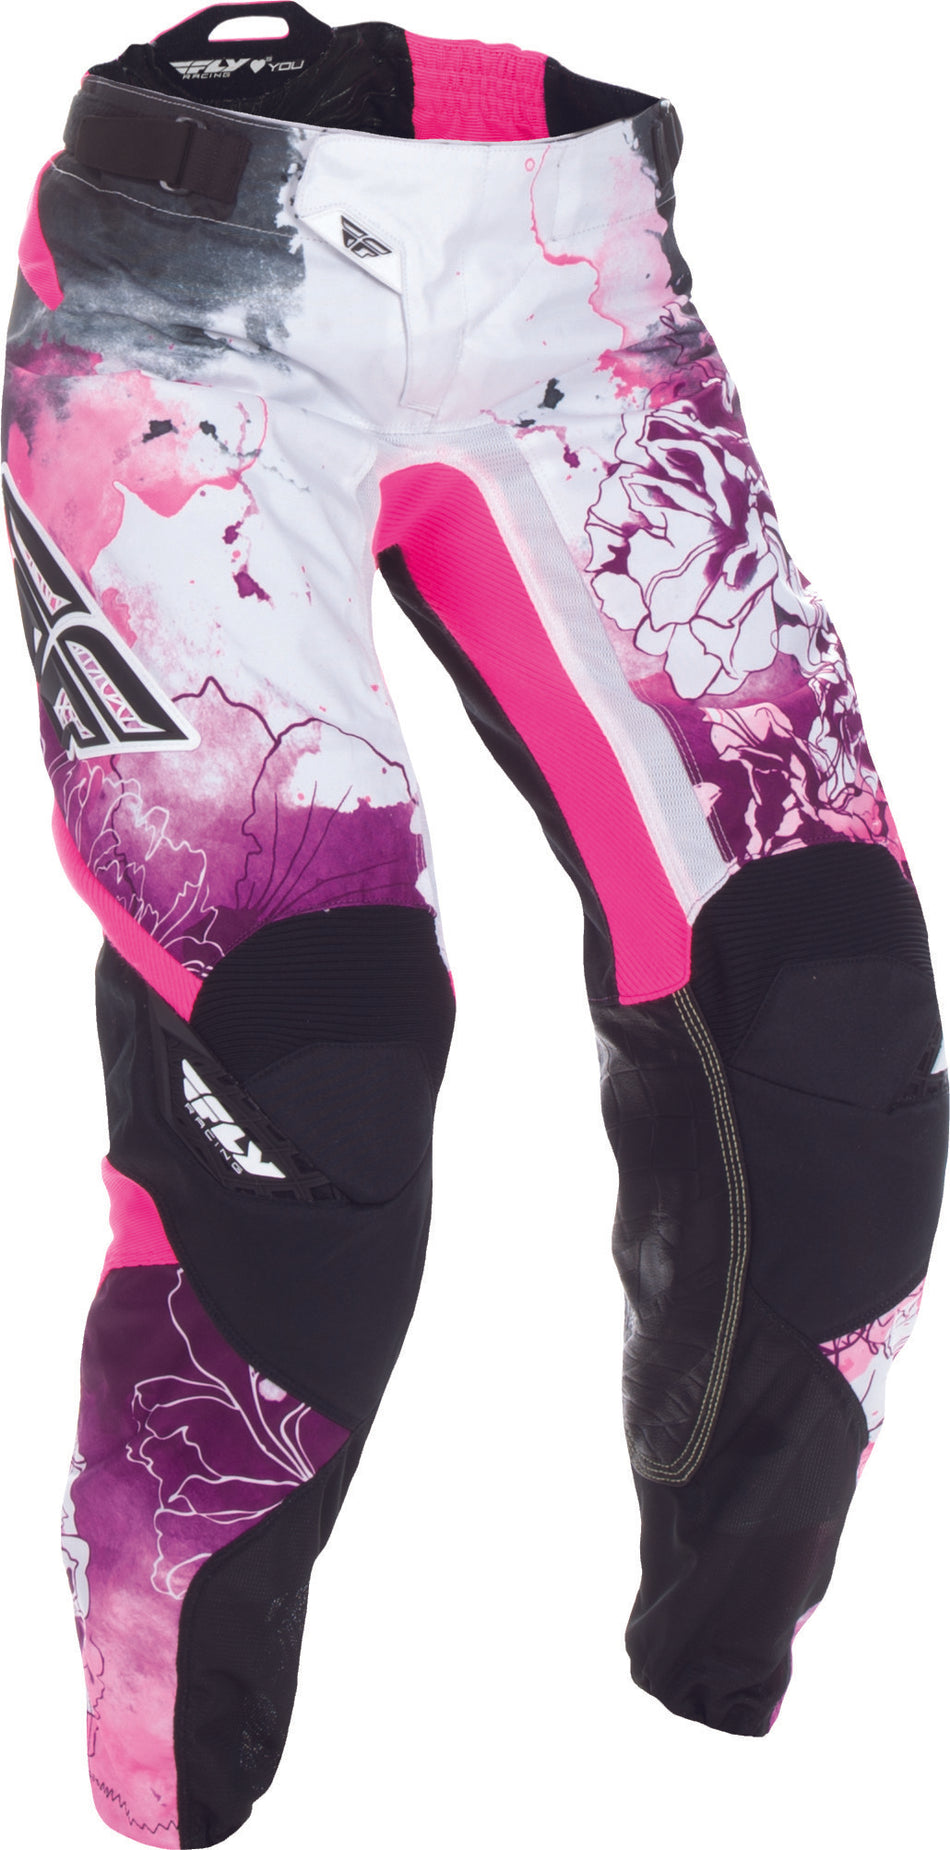 FLY RACING Kinetic Women's Race Pant Pink/Purple Sz 11/12 370-63209